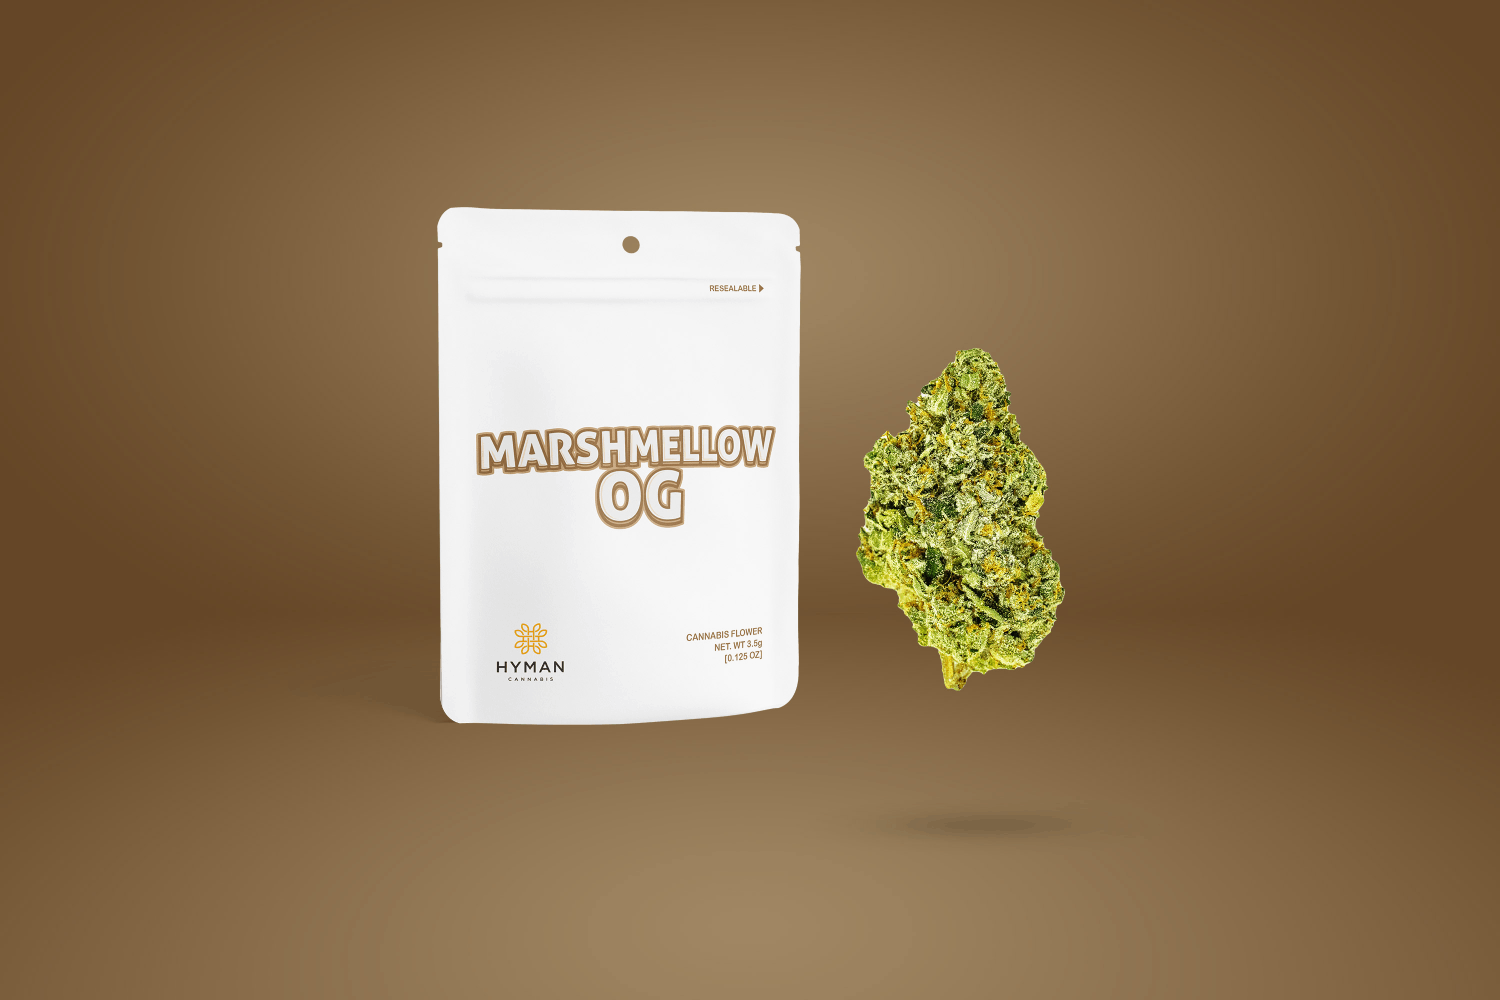 Marshmellow OG, Weed Buds, Hyman Cannabis Strain